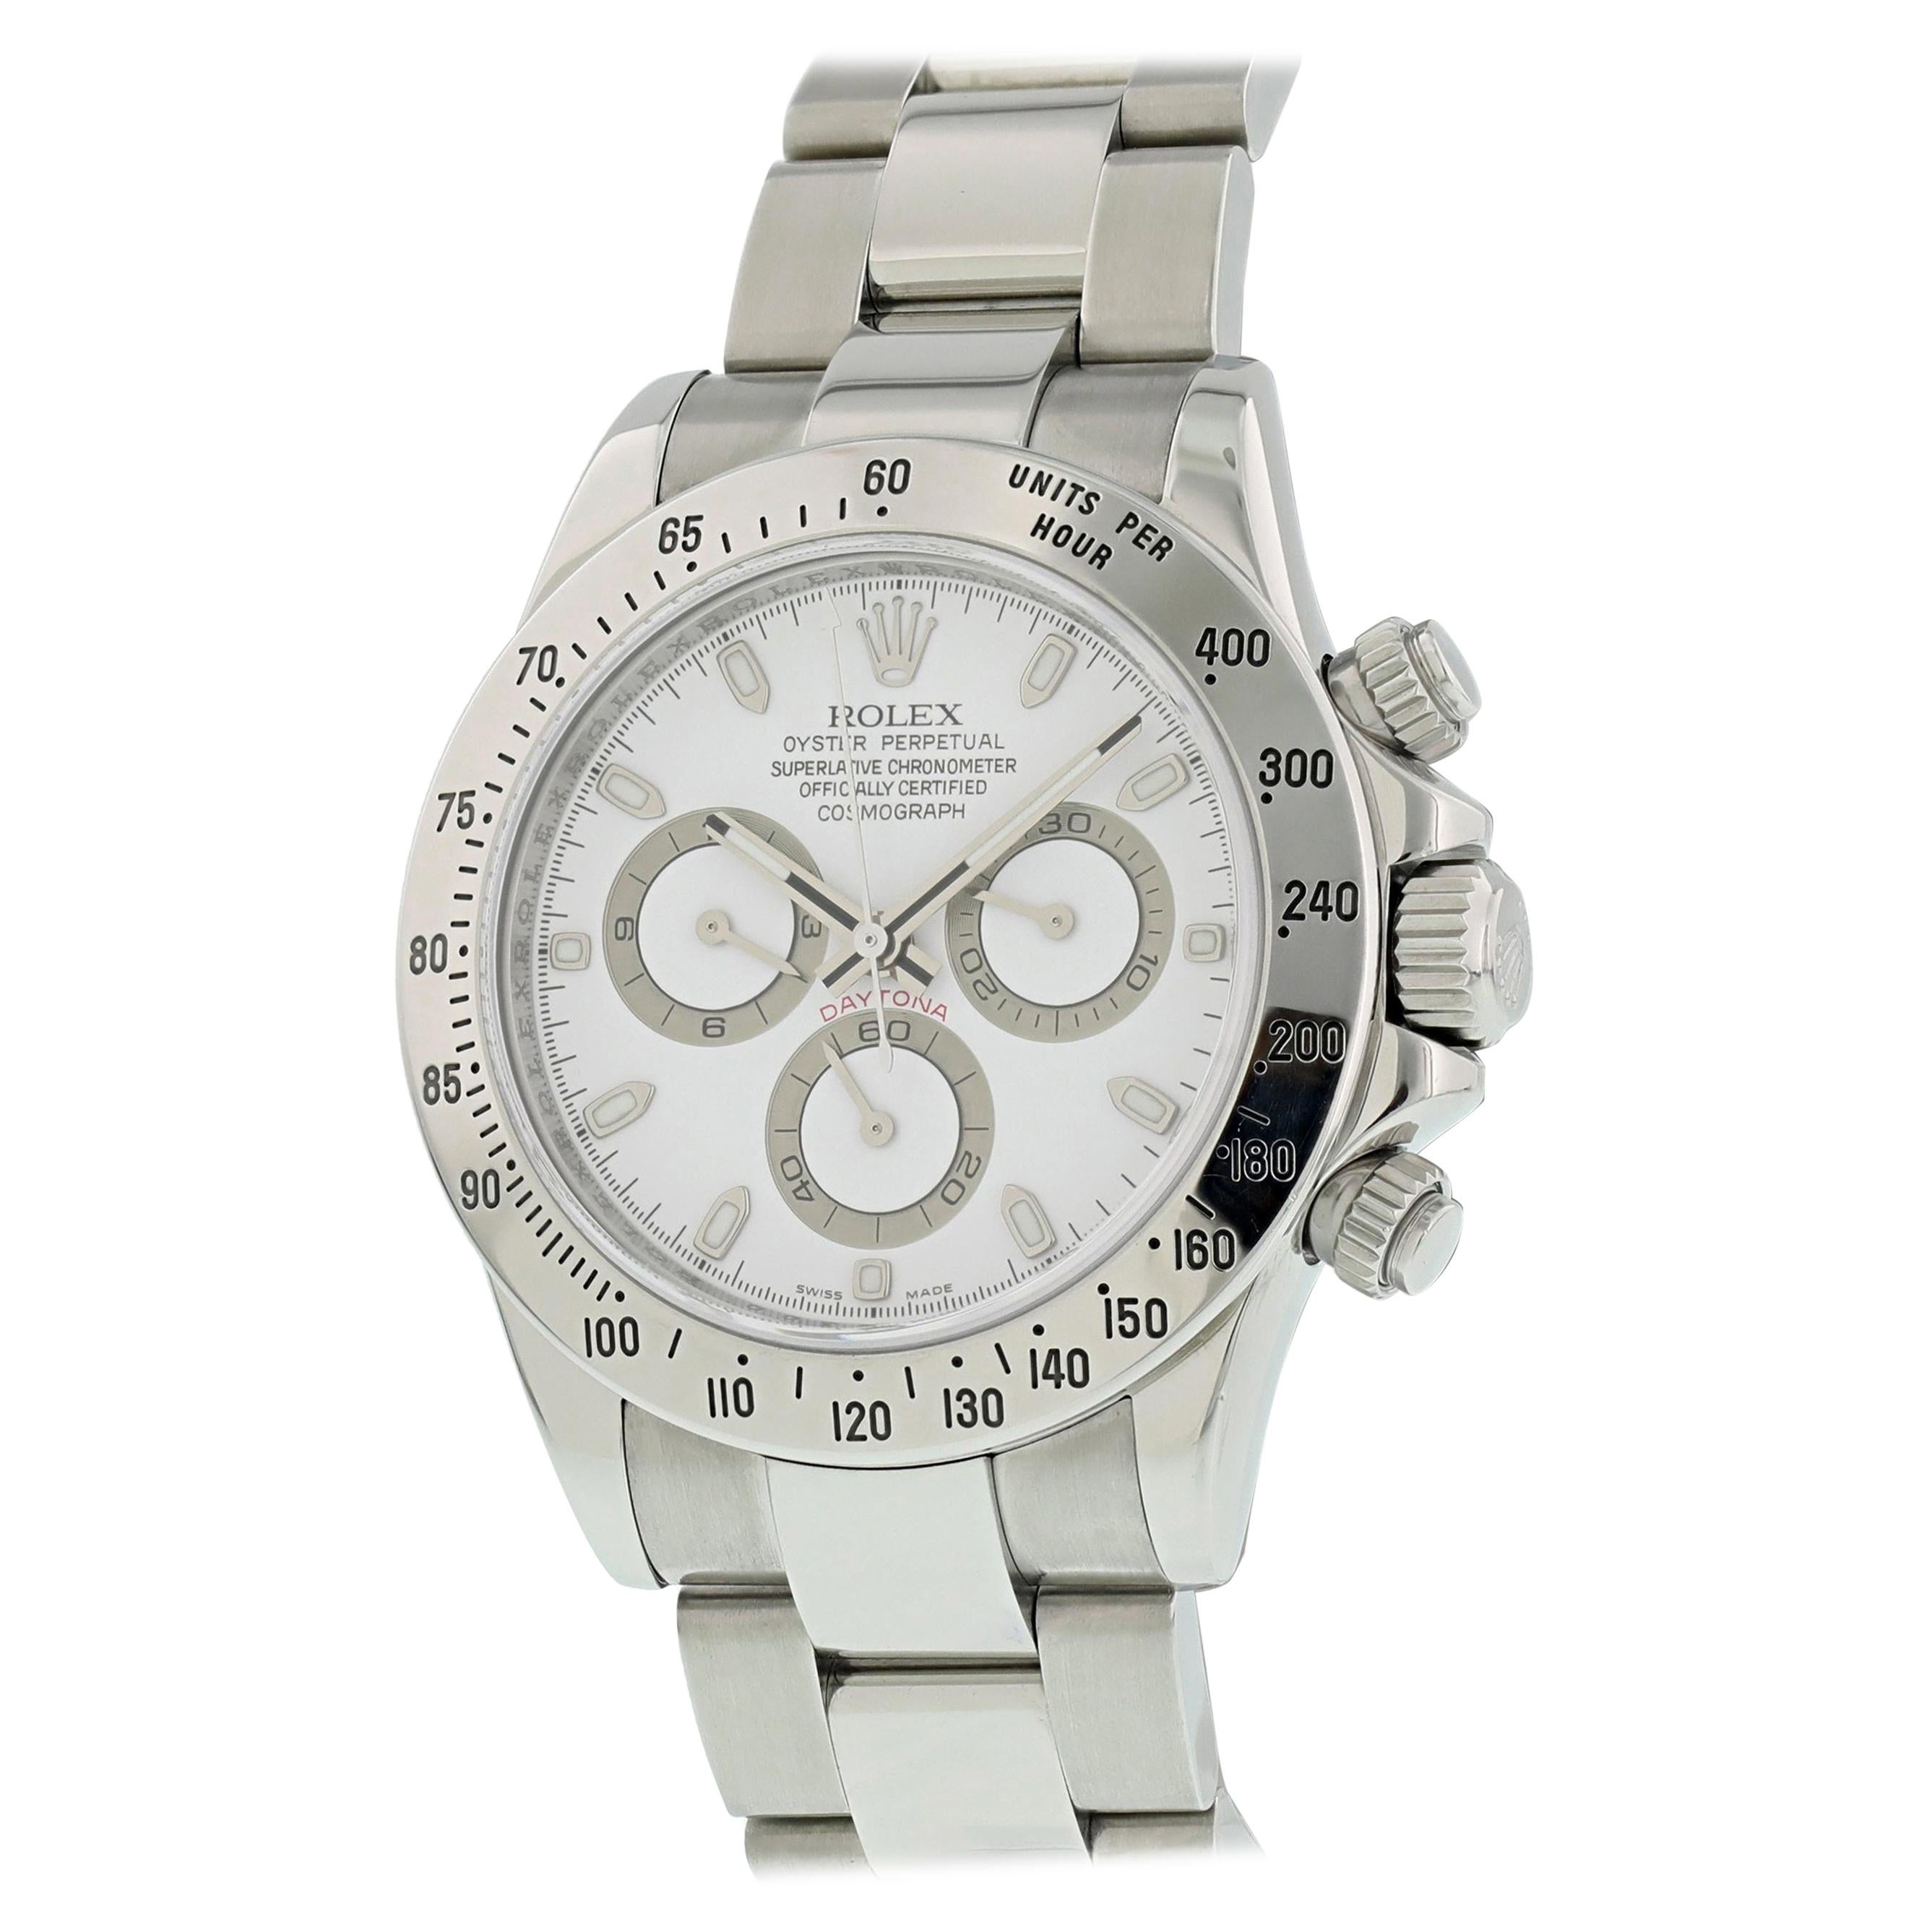 Rolex Oyster Perpetual Daytona Cosmograph 116520 Men's Watch